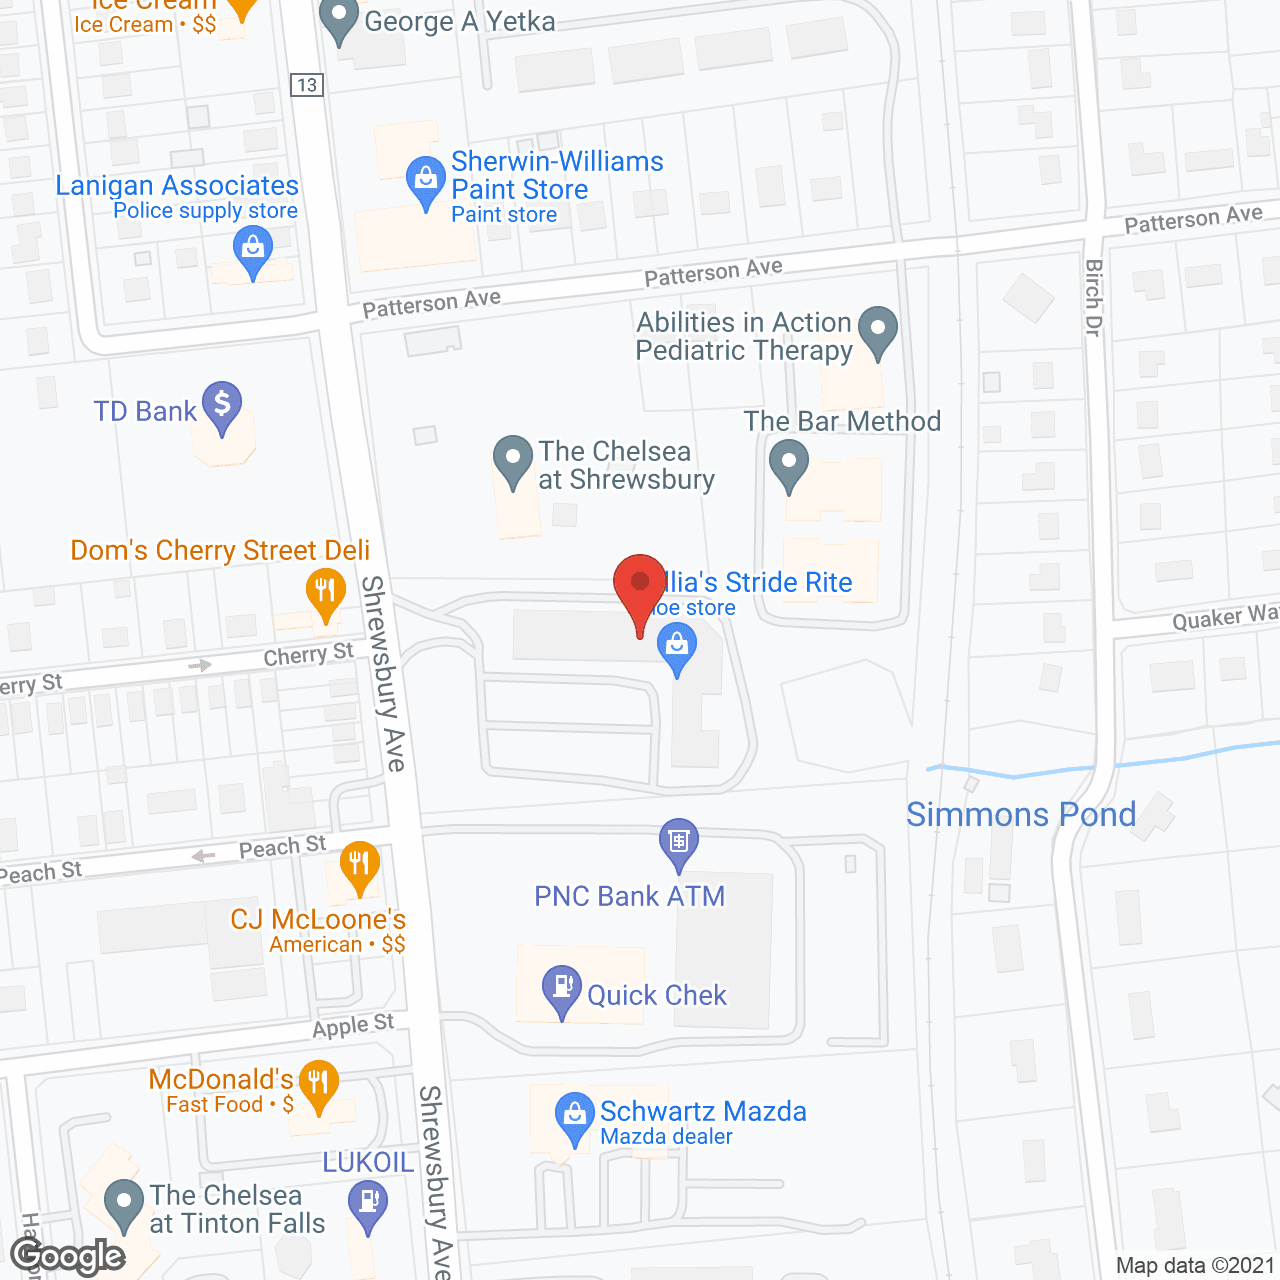 The Chelsea at Shrewsbury in google map